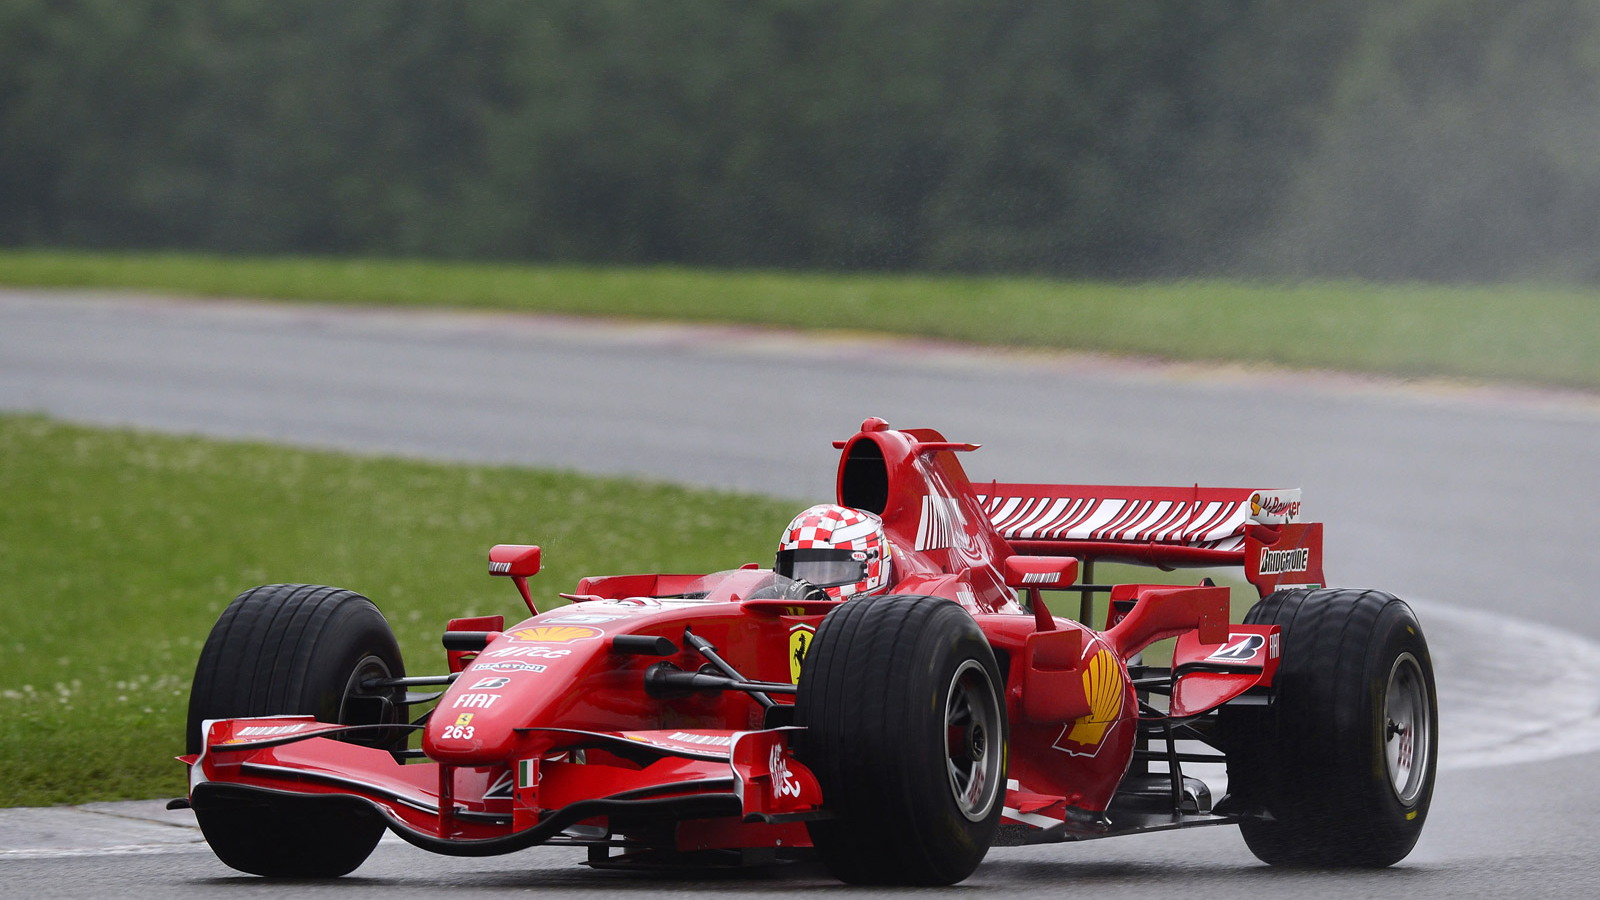 Ferrari F1 Clienti and XX Program at Spa Francorchamps, July 2012